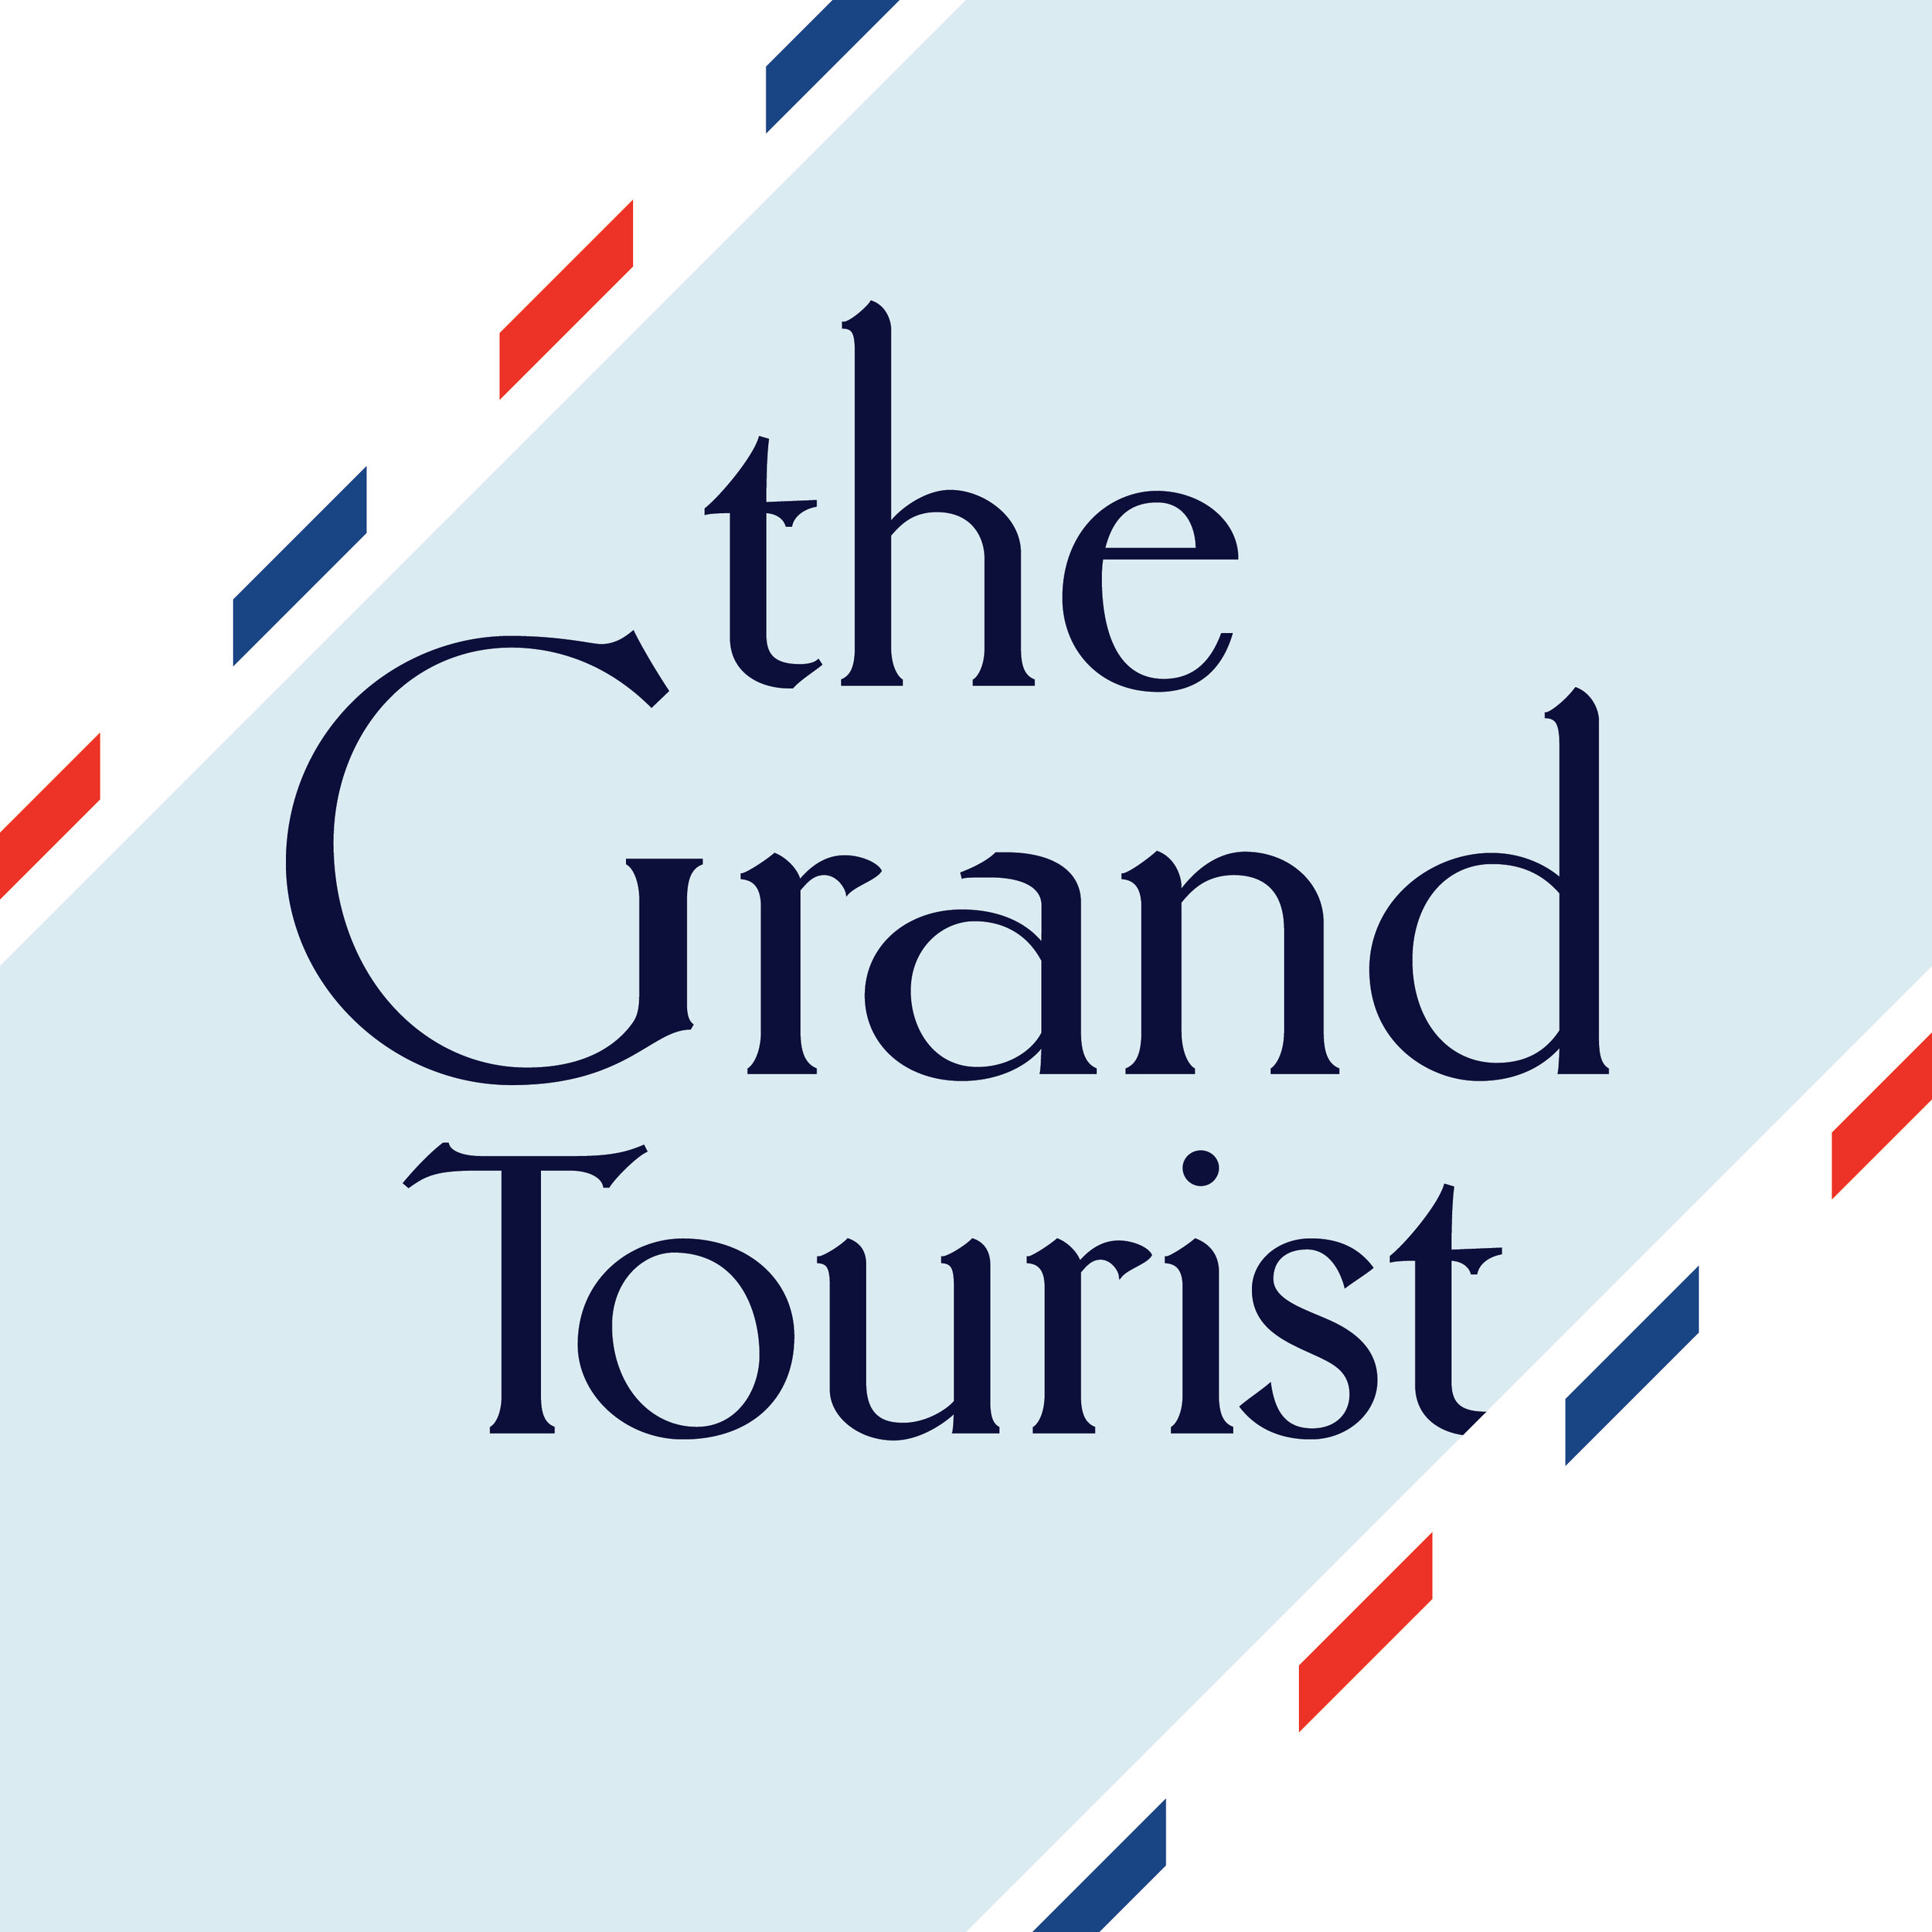 THE GRAND TOURIST 1 (1).jpg